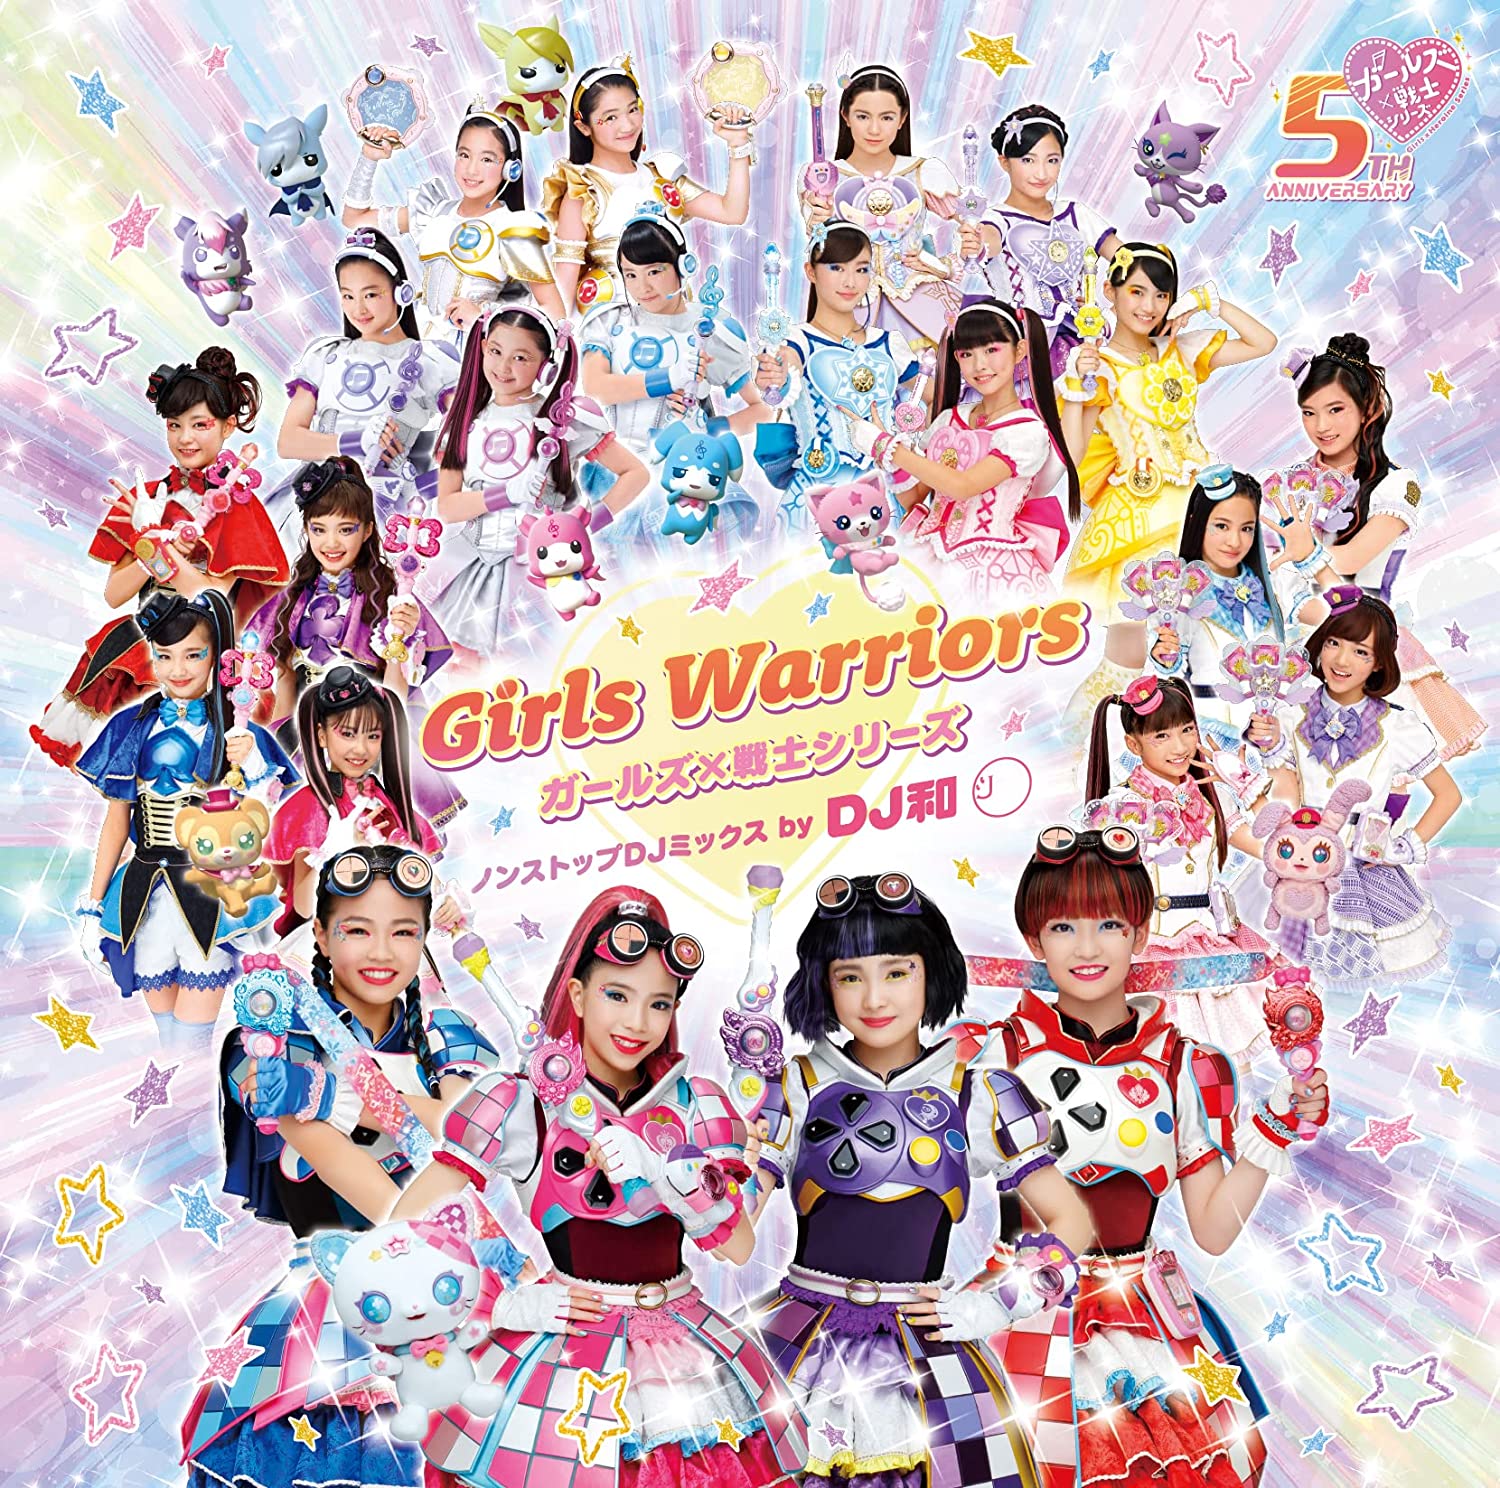 Girls Warriors - Girls x Heroine Series Nonstop DJ MIX by DJ Kazu 